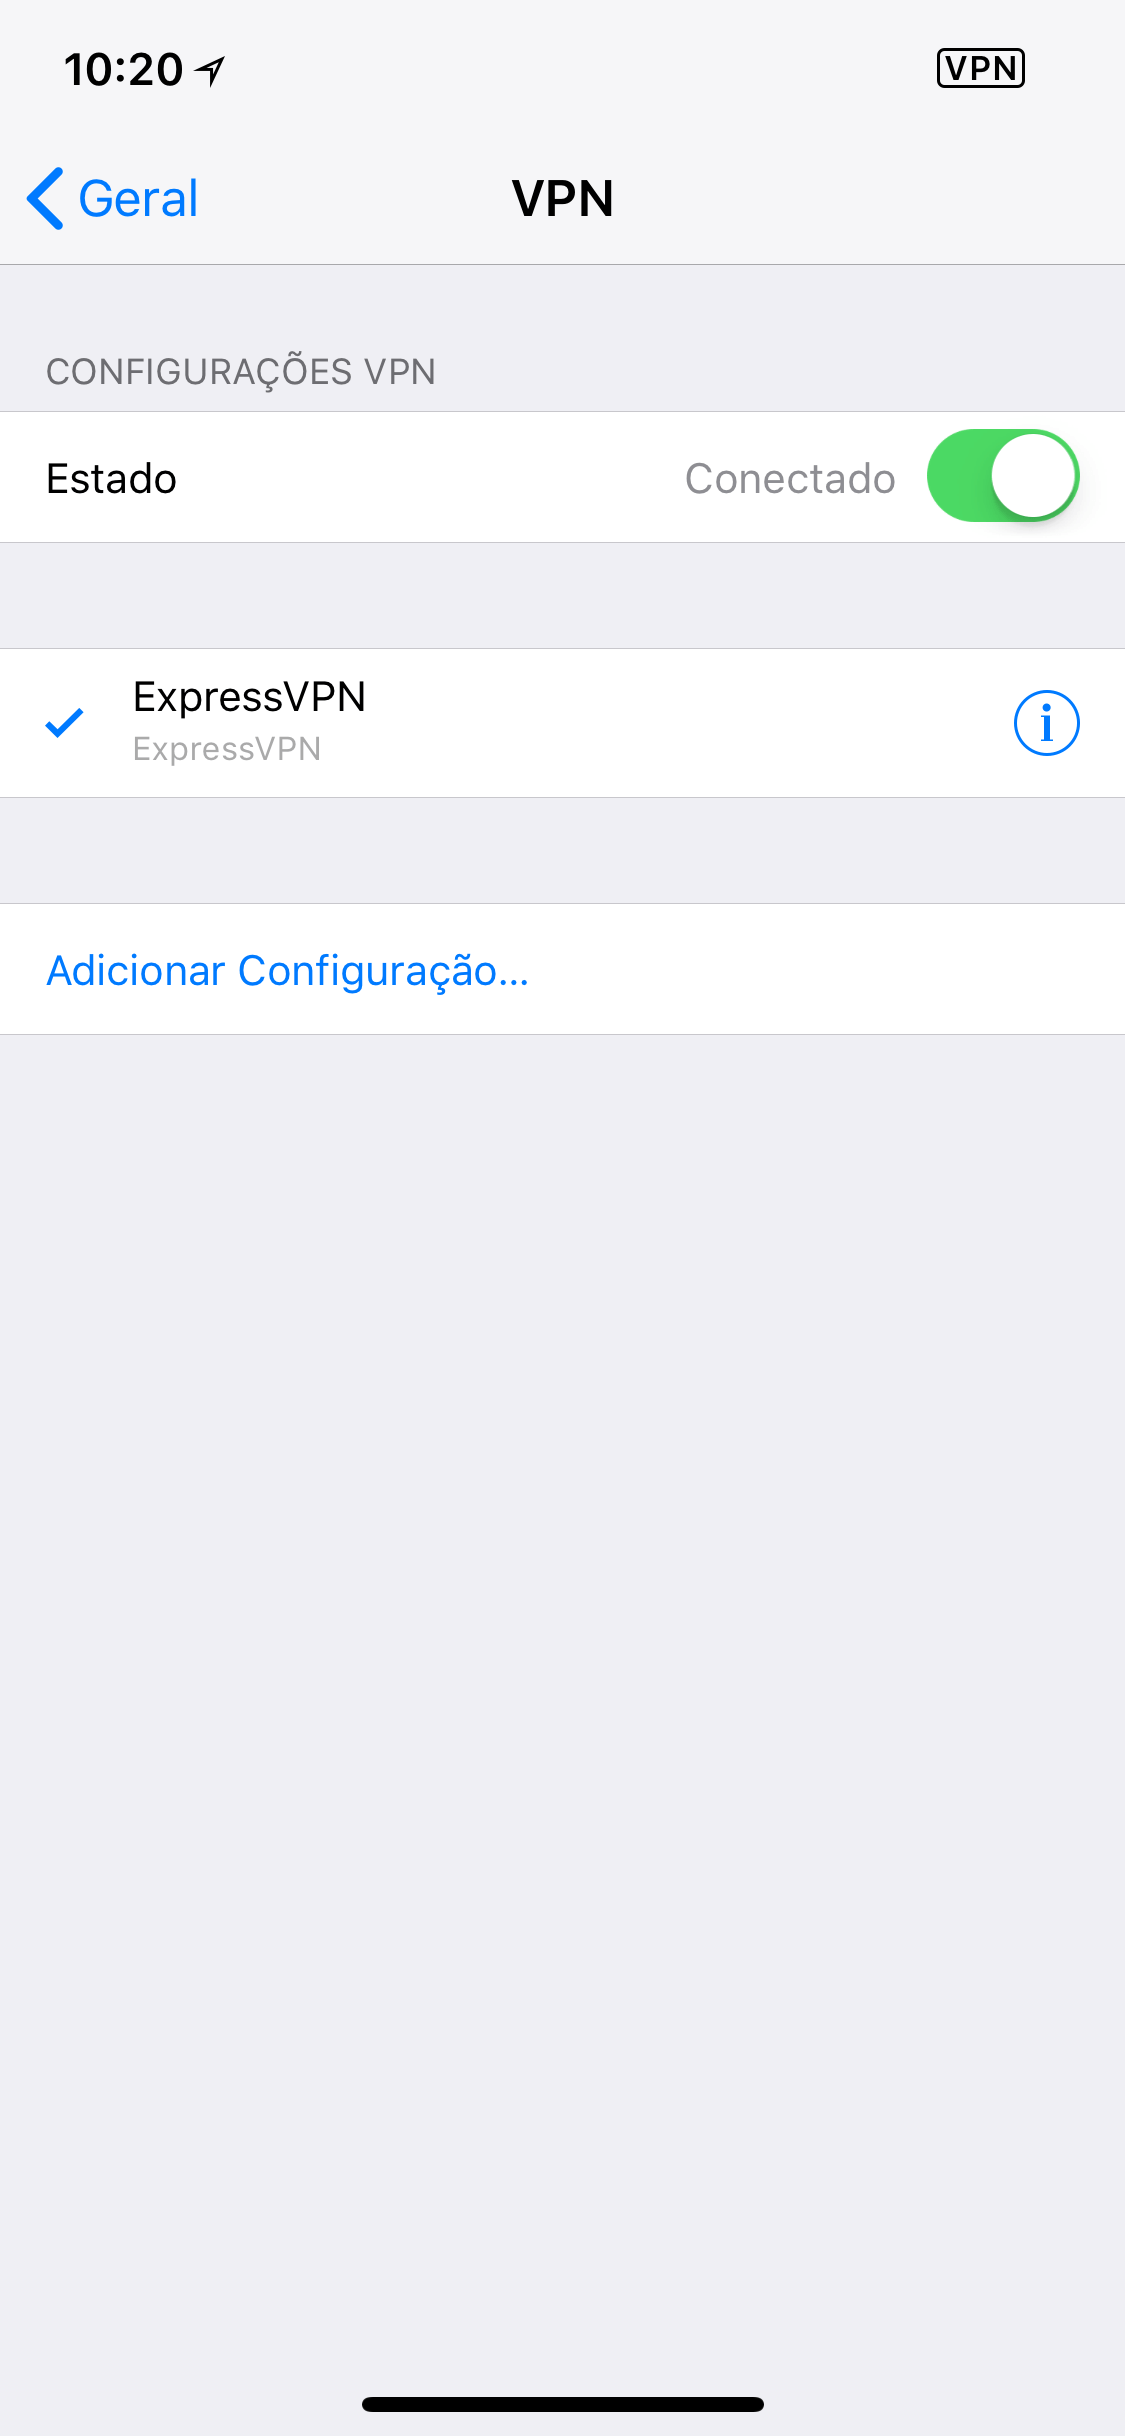 Setting up VPN on iOS